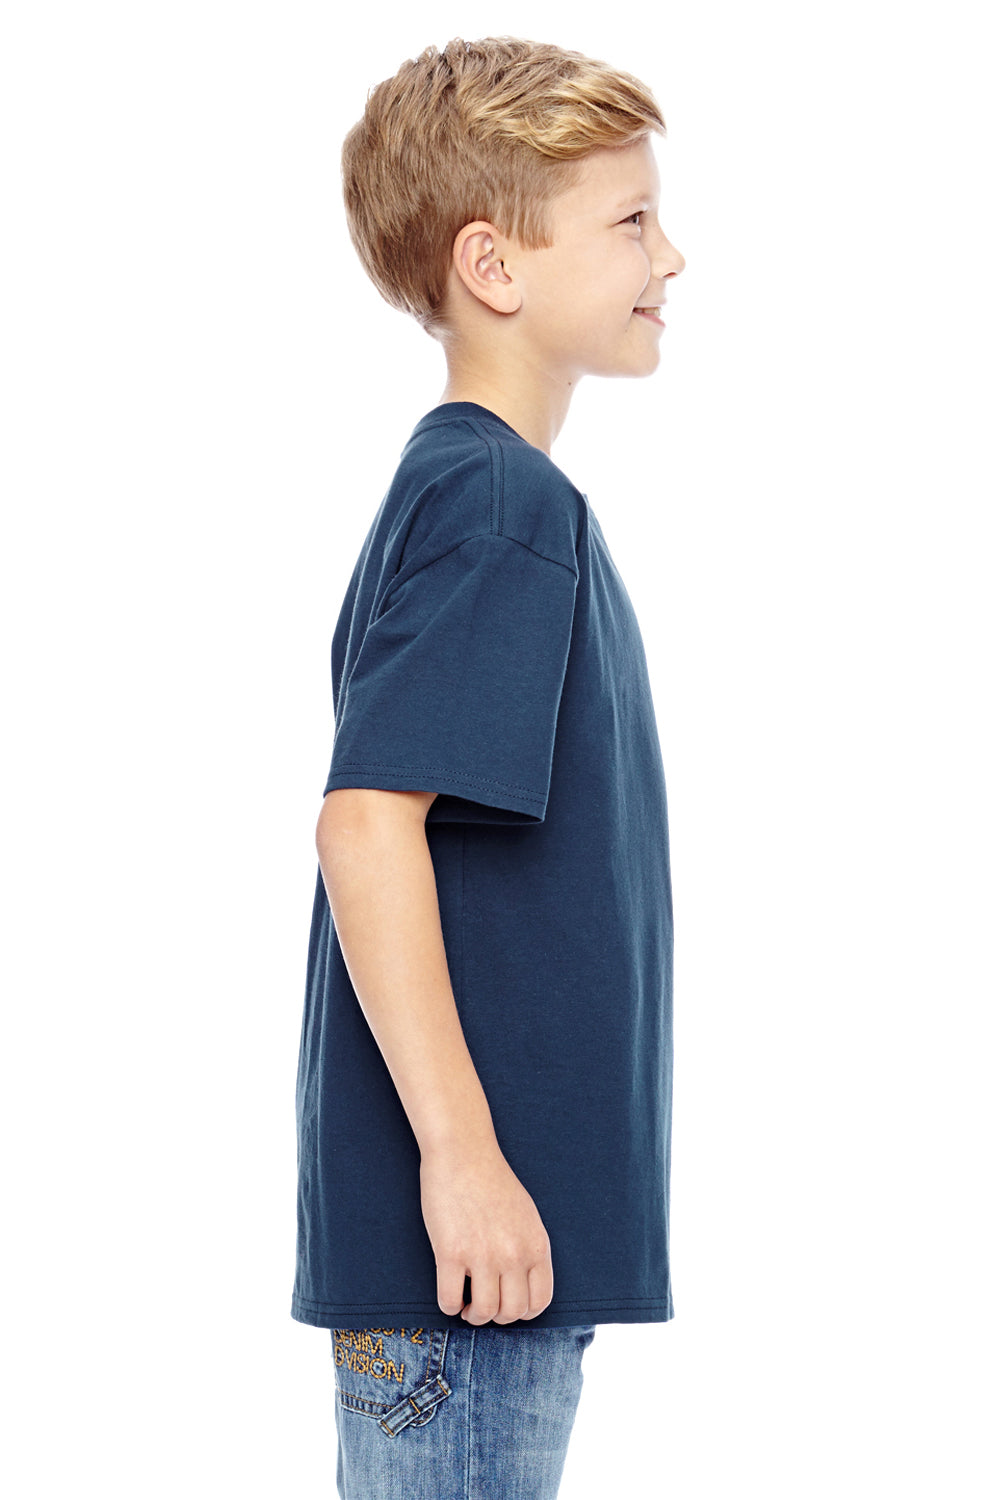 Hanes 498Y Youth Nano-T Short Sleeve Crewneck T-Shirt Navy Blue Side